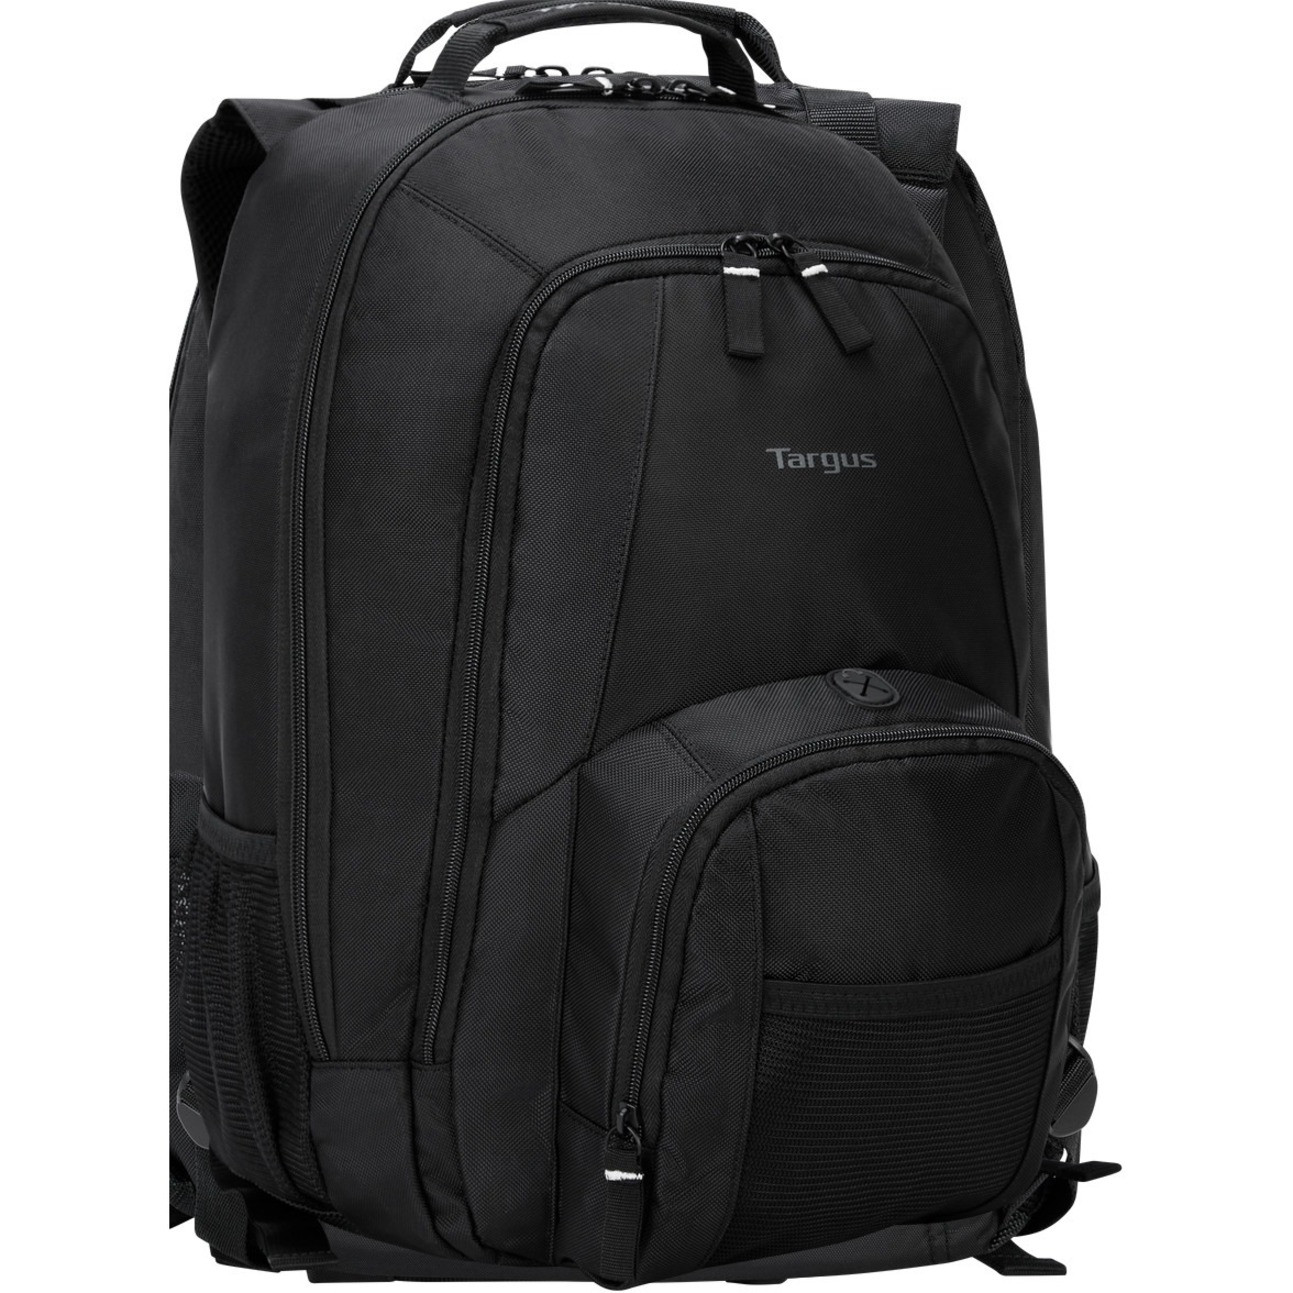 Targus Groove CVR600 Carrying Case (Backpack) for 16″ NotebookBlackWear Resistant Bottom, Shock Resistant, Water Resistant Bottom -… CVR600-BENT-02